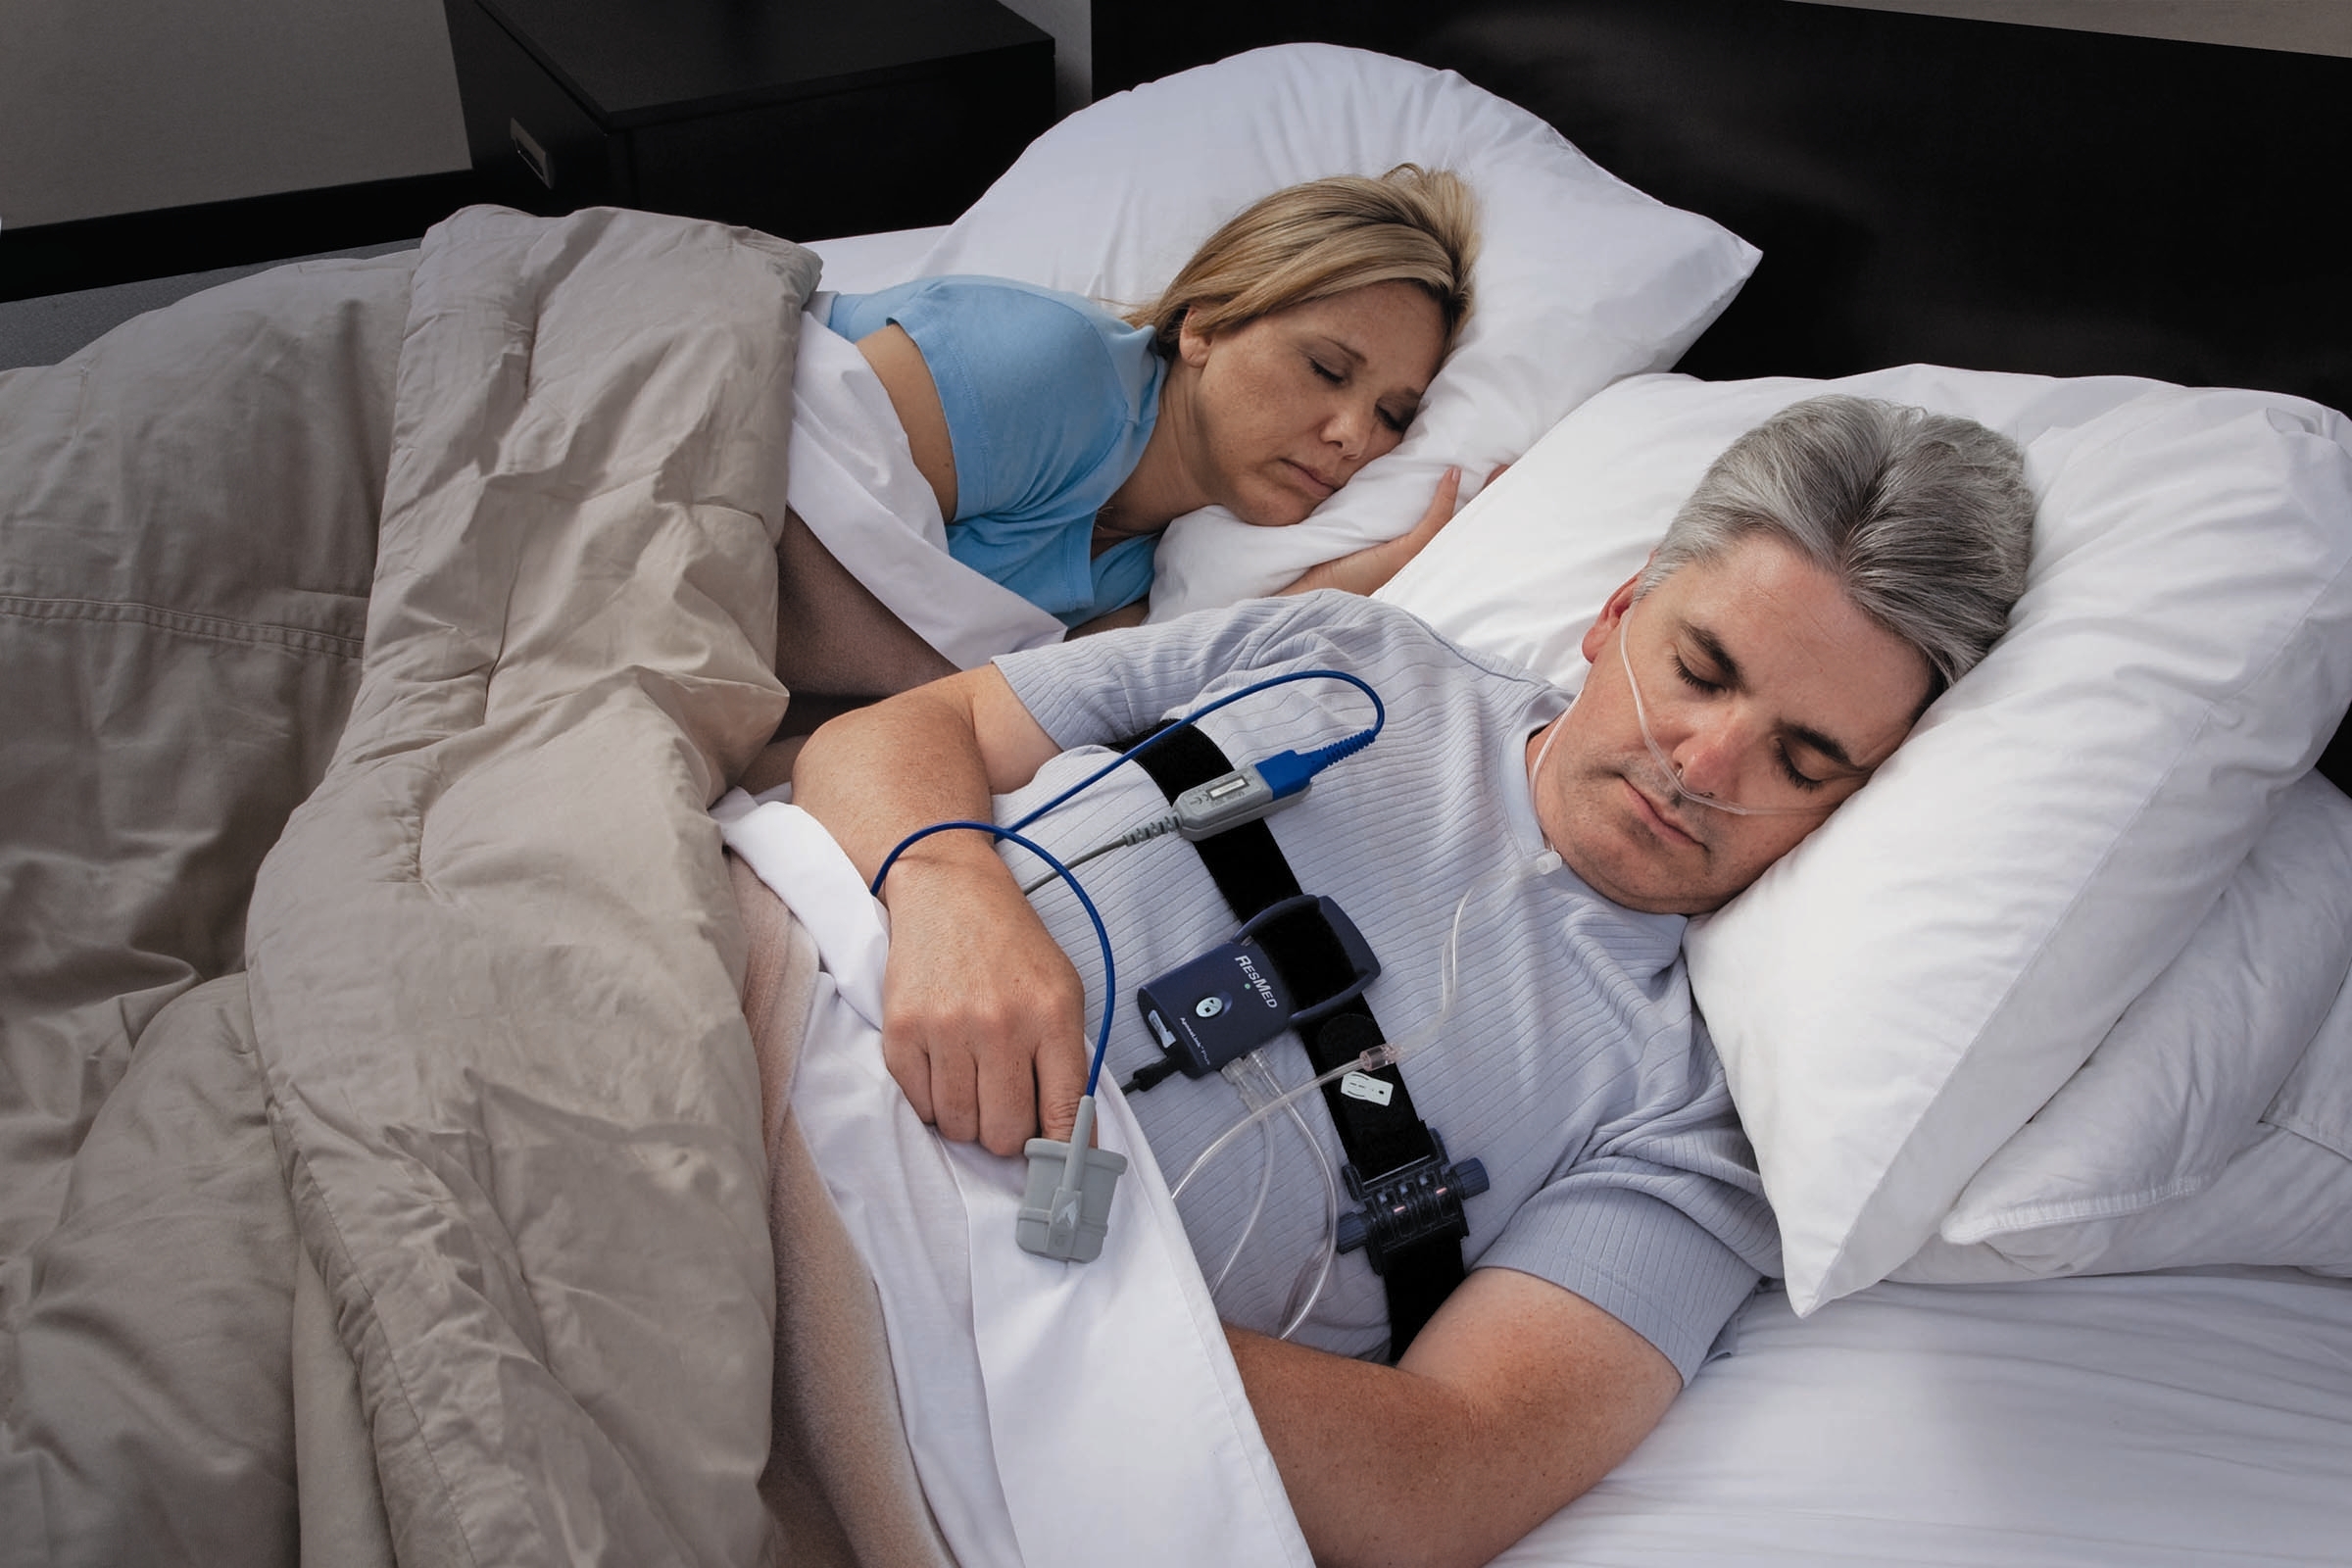 Sleep Apnea Test - Accurately Testing And Detecting Sleep Apnea | Sleep